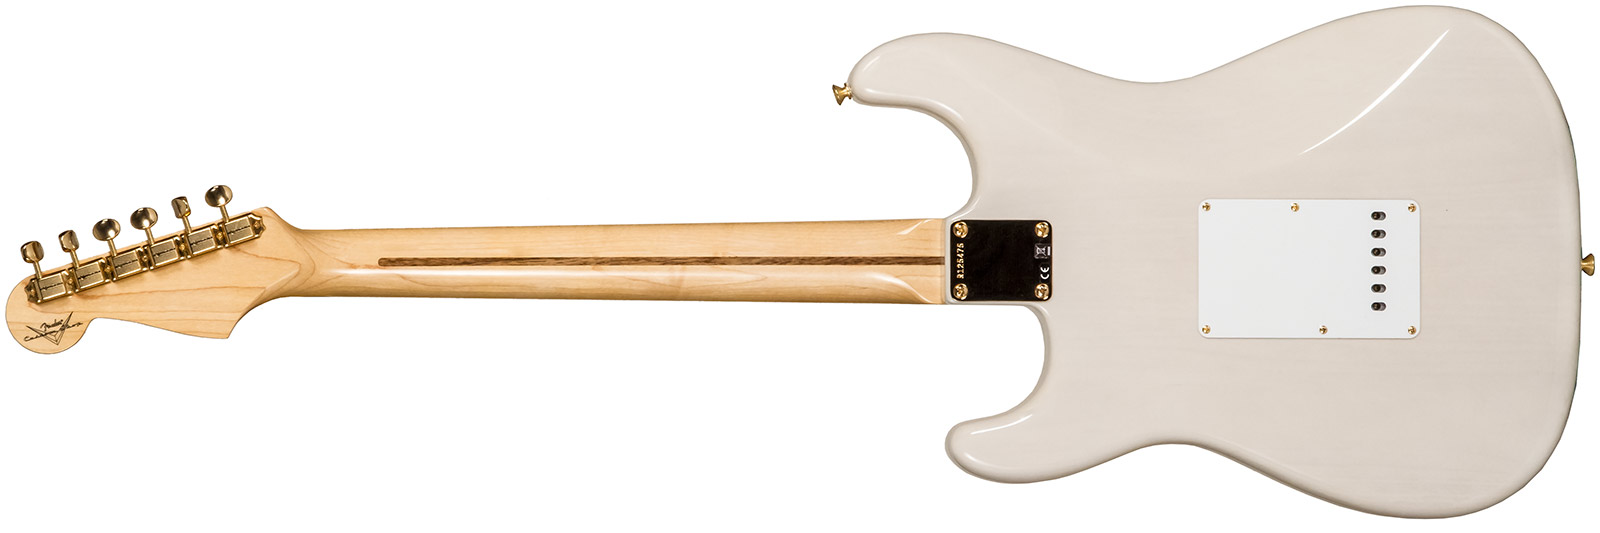 Fender Custom Shop Strat 1957 3s Trem Mn #r125475 - Nos White Blonde - E-Gitarre in Str-Form - Variation 1